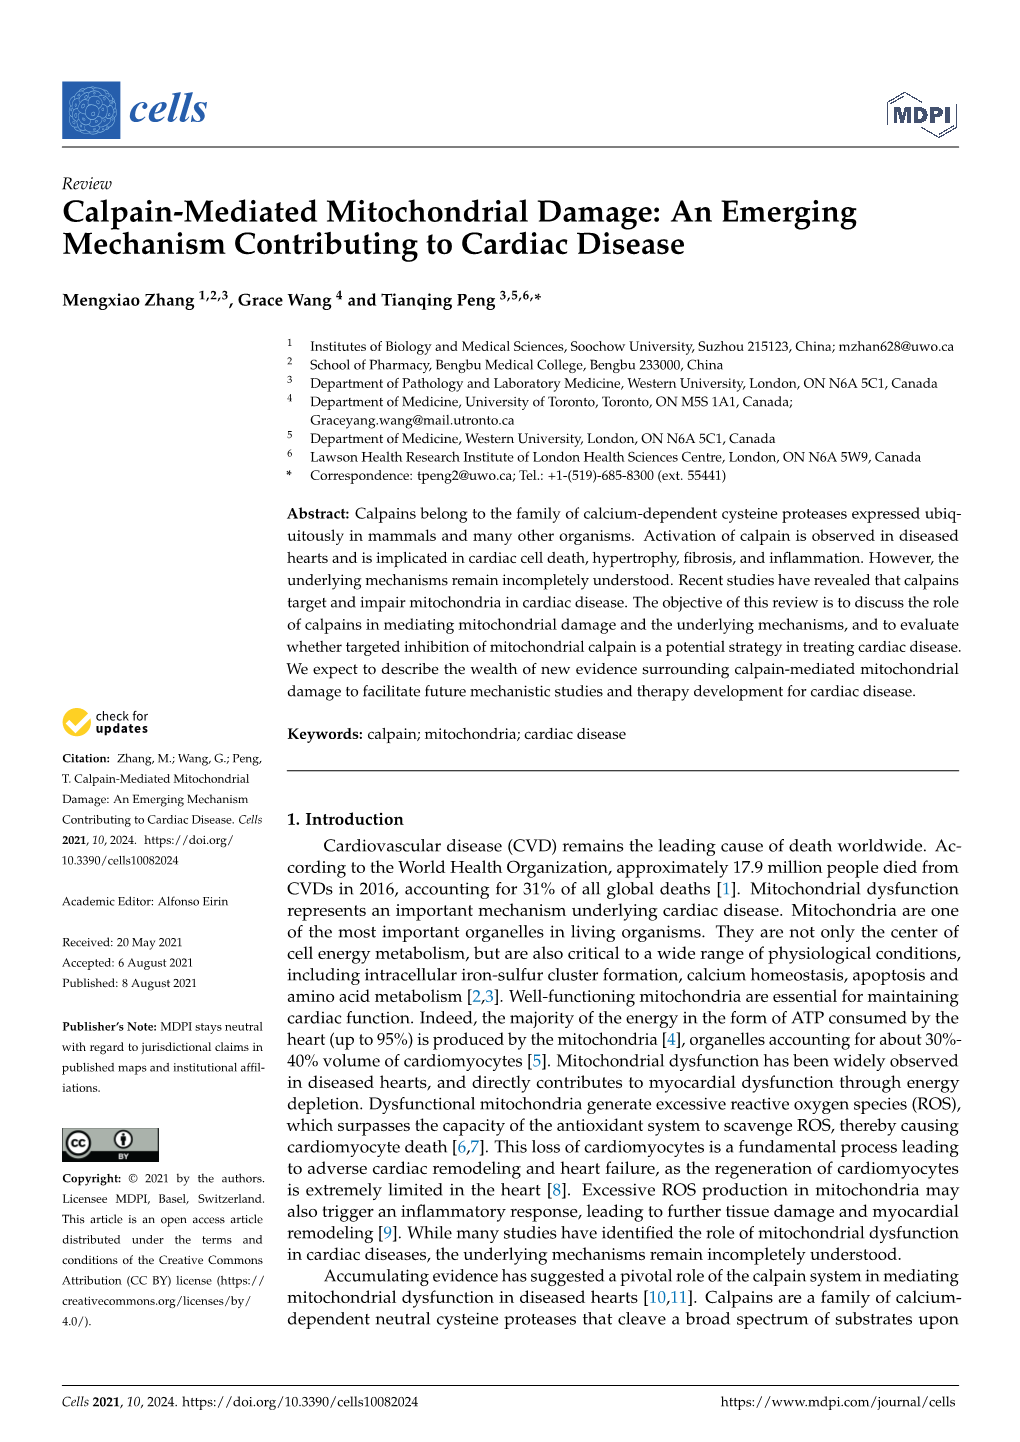 Calpain-Mediated Mitochondrial Damage: an Emerging Mechanism Contributing to Cardiac Disease